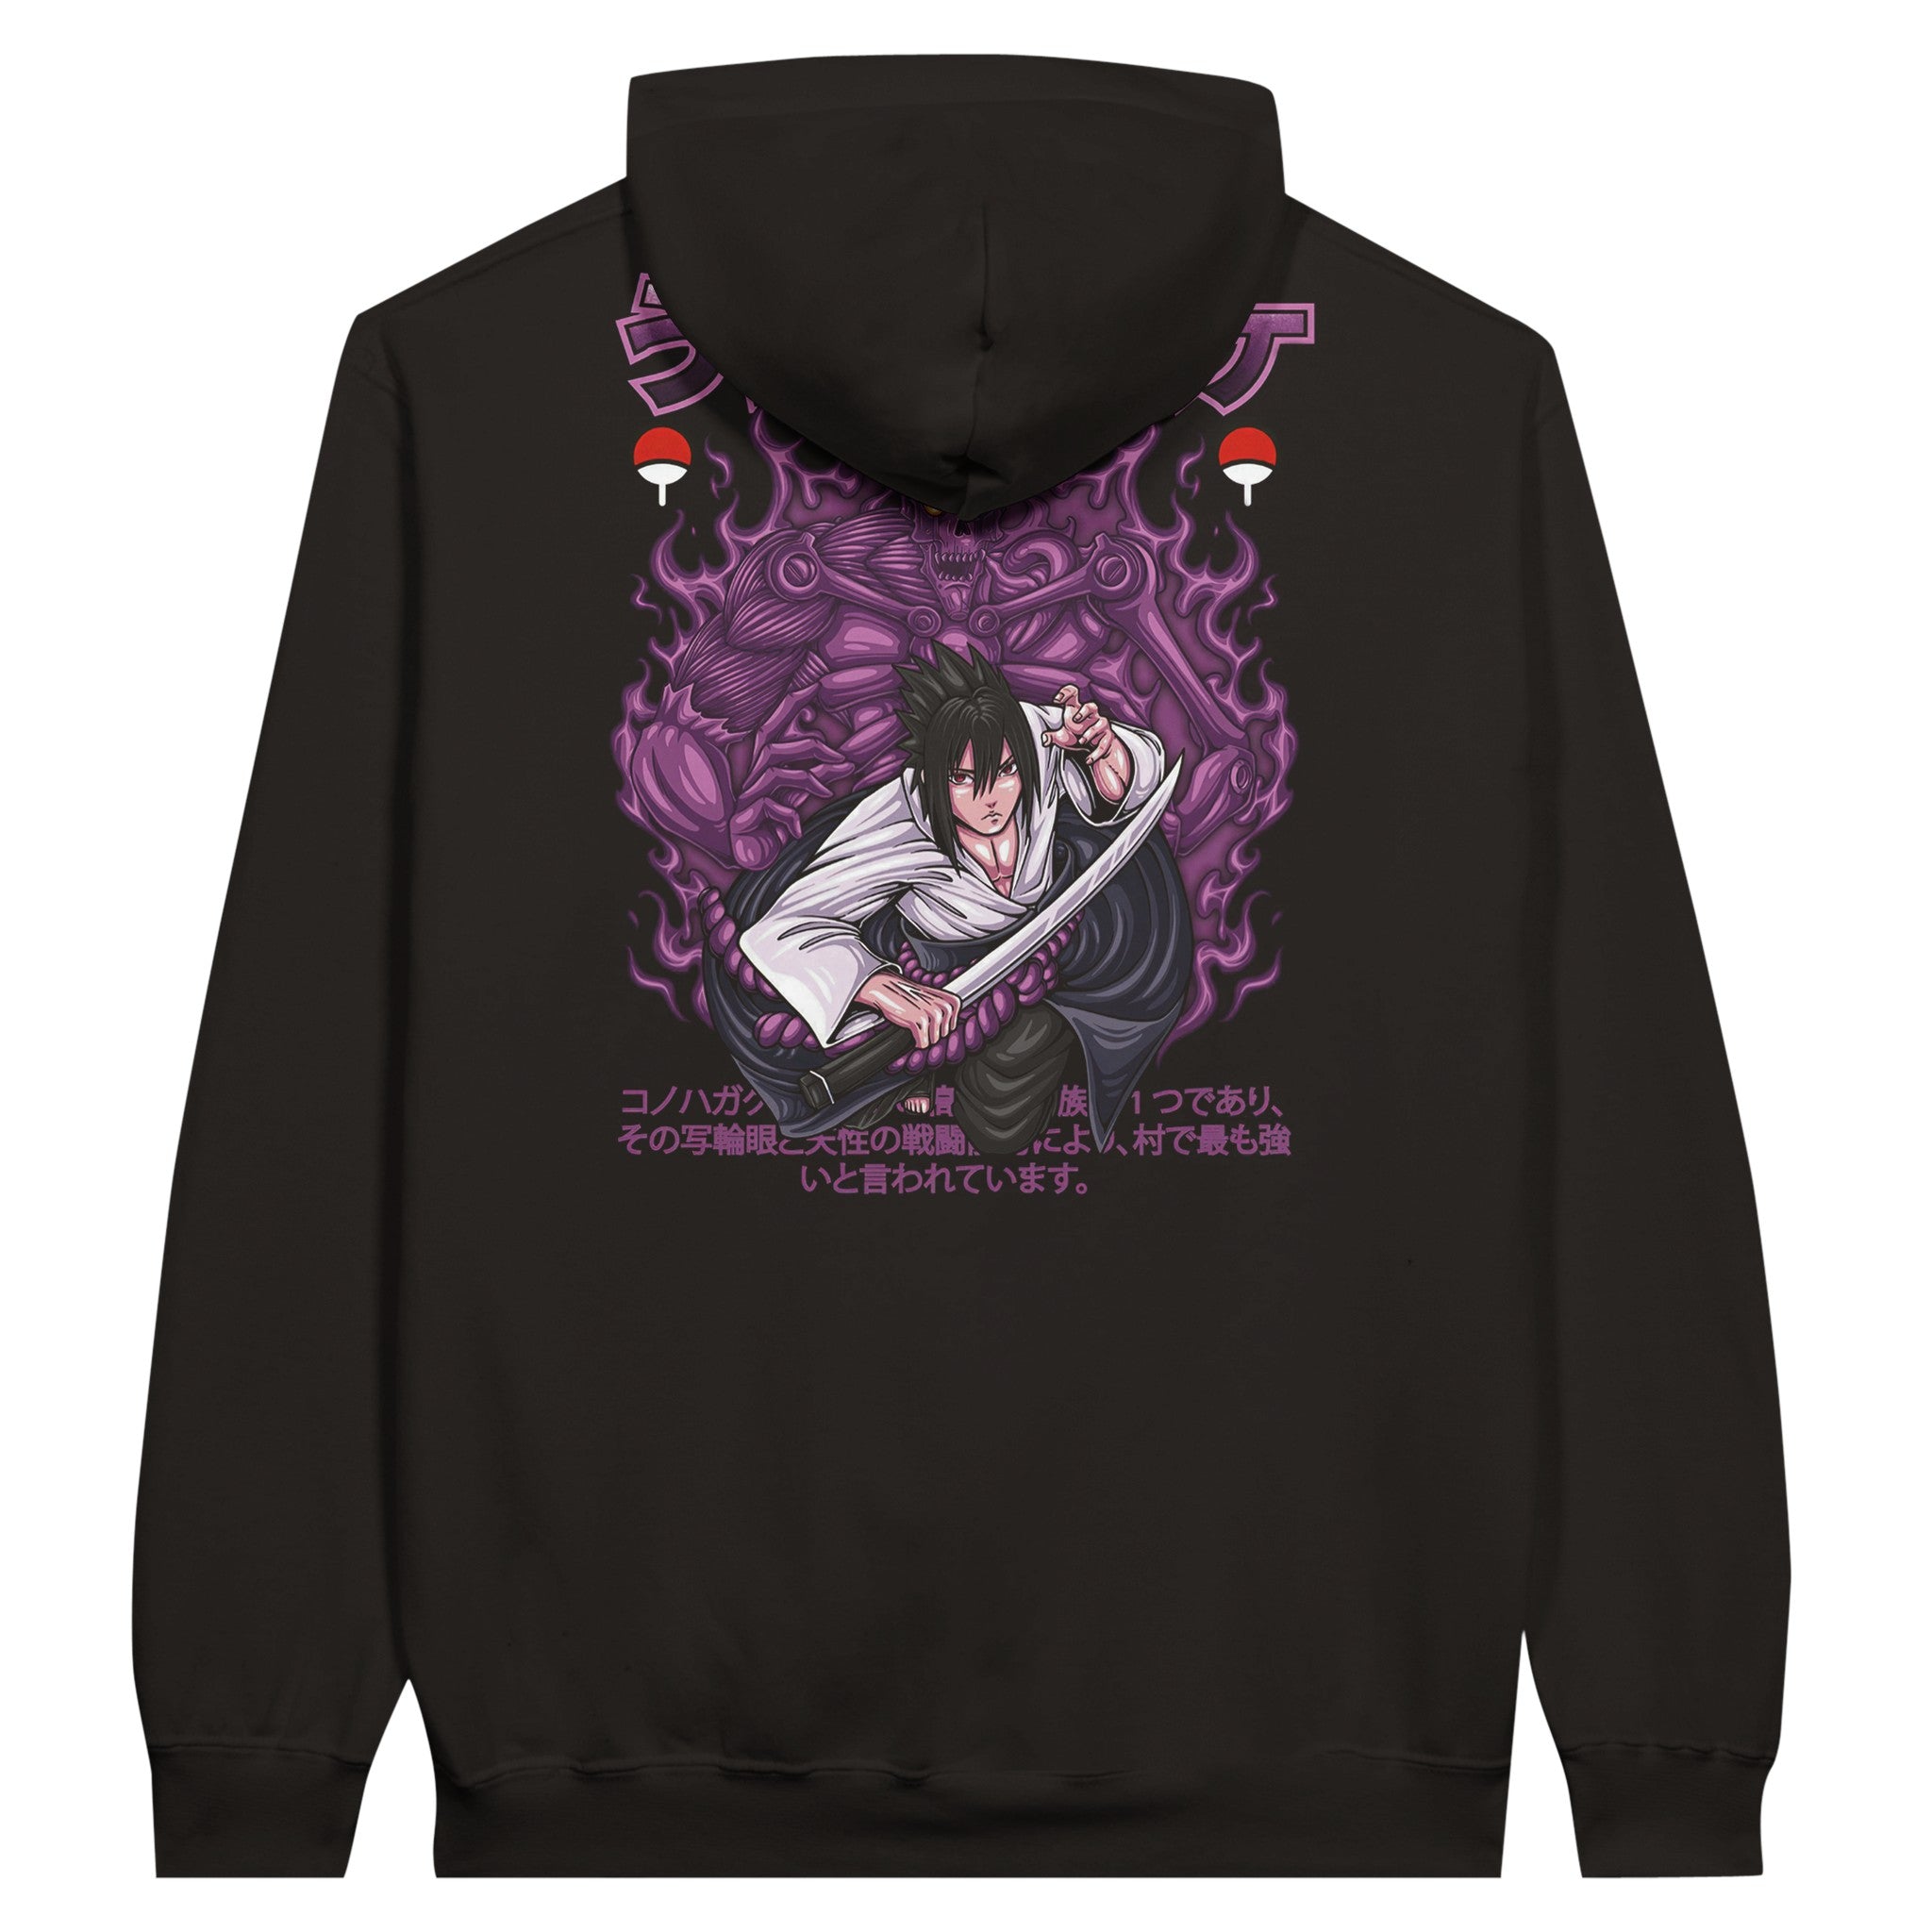 shop and buy naruto sasuke uchiha anime clothing hoodie